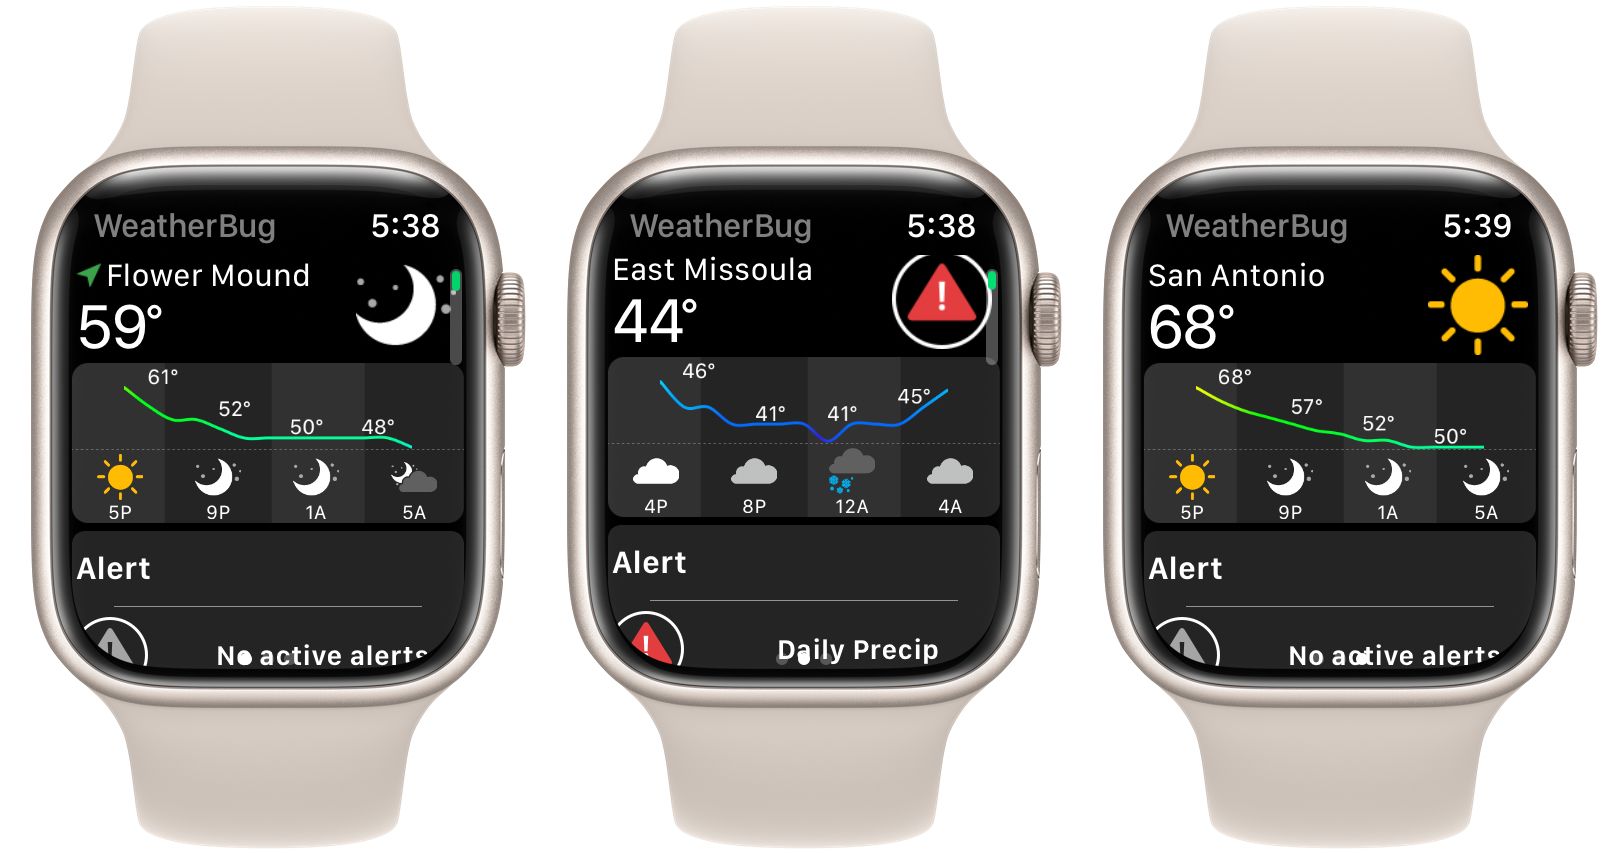 Weatherbug apple watch app